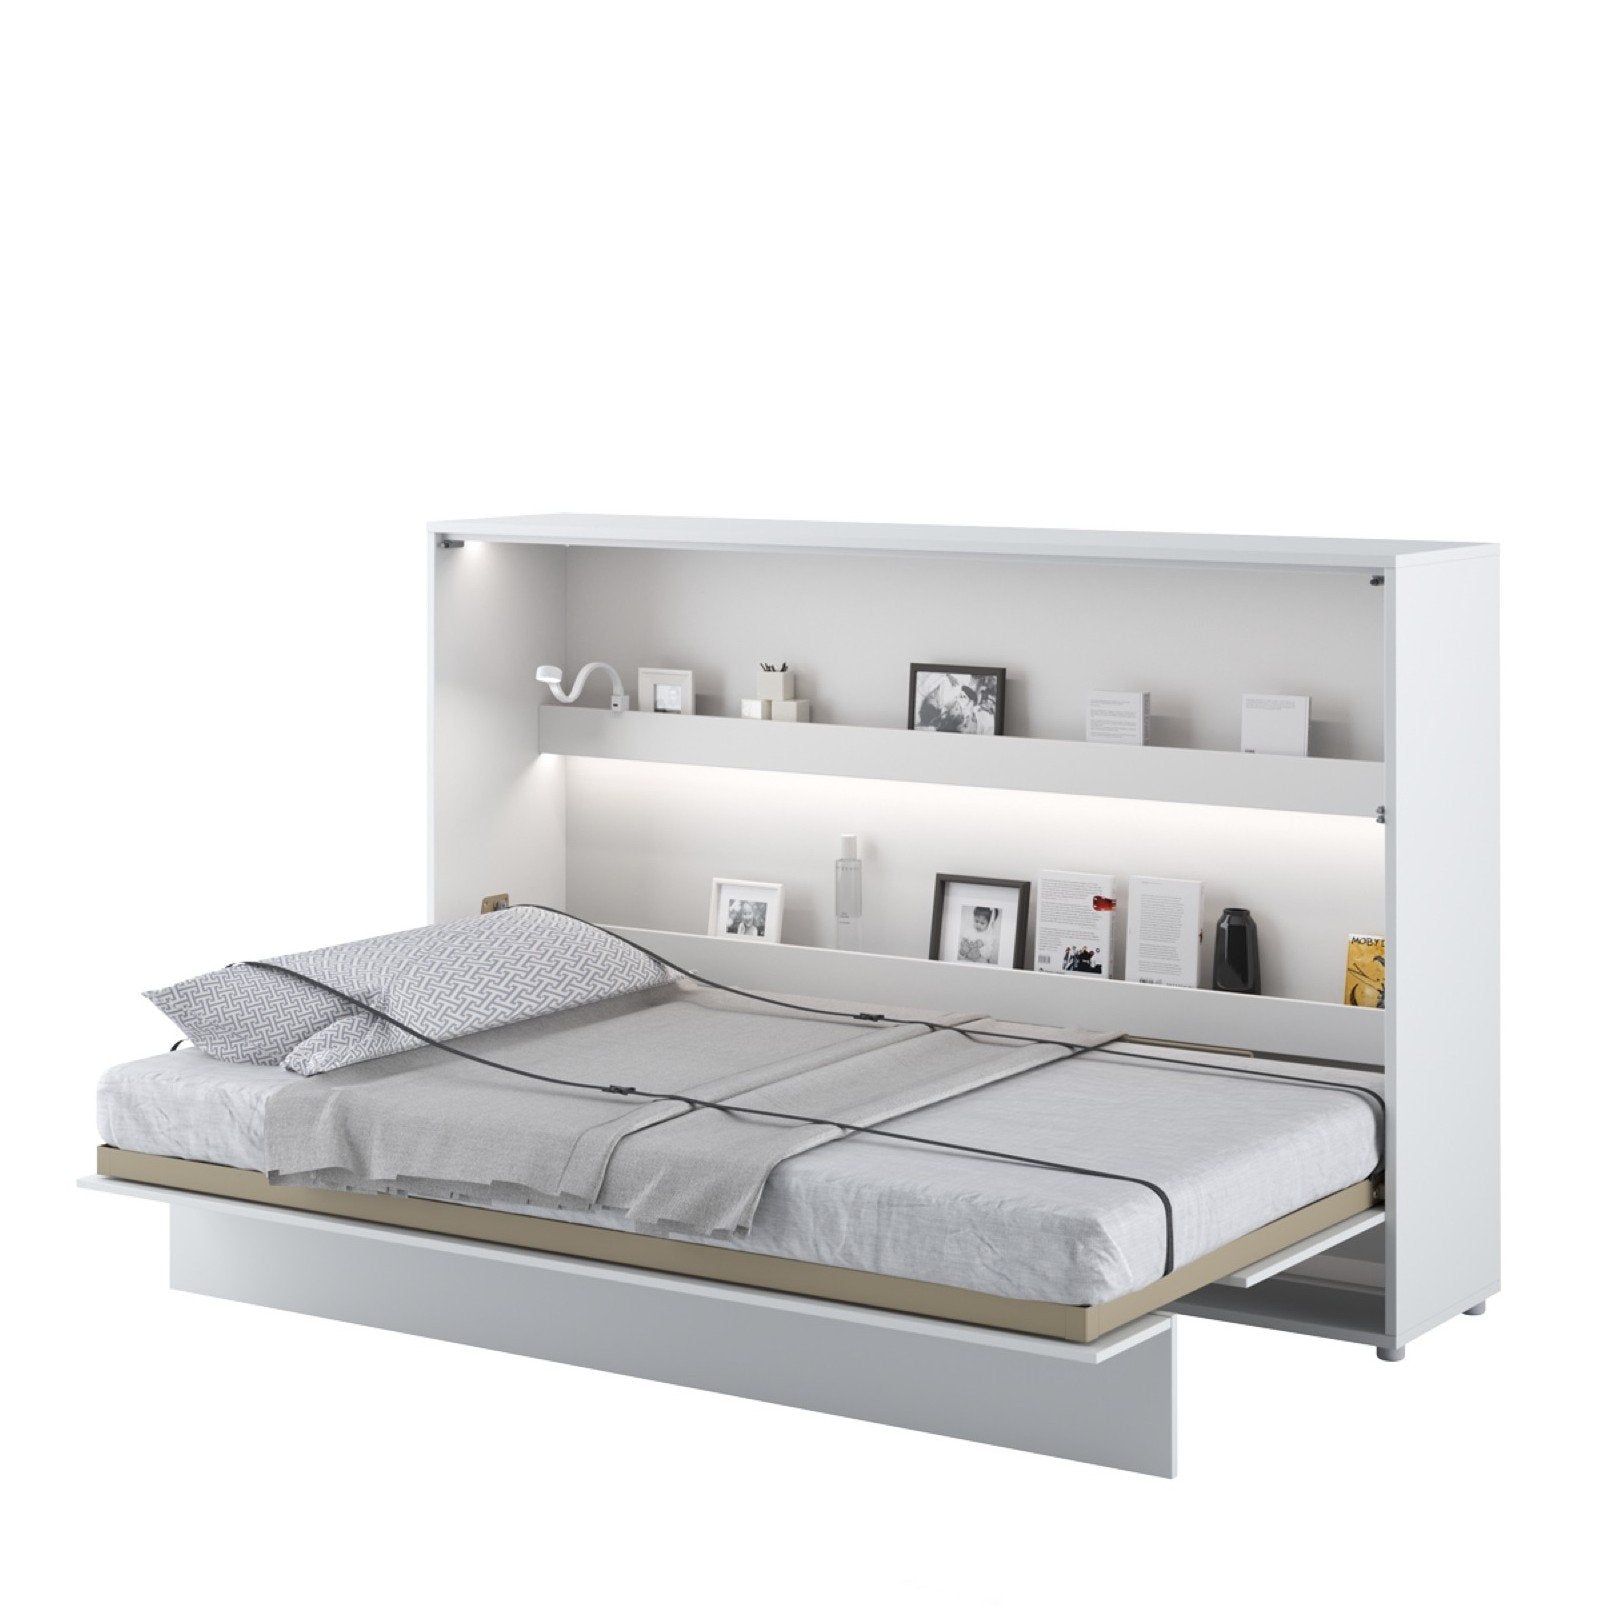 View BC05 Horizontal Wall Bed Concept 120cm Murphy Bed White Matt 120 x 200cm information